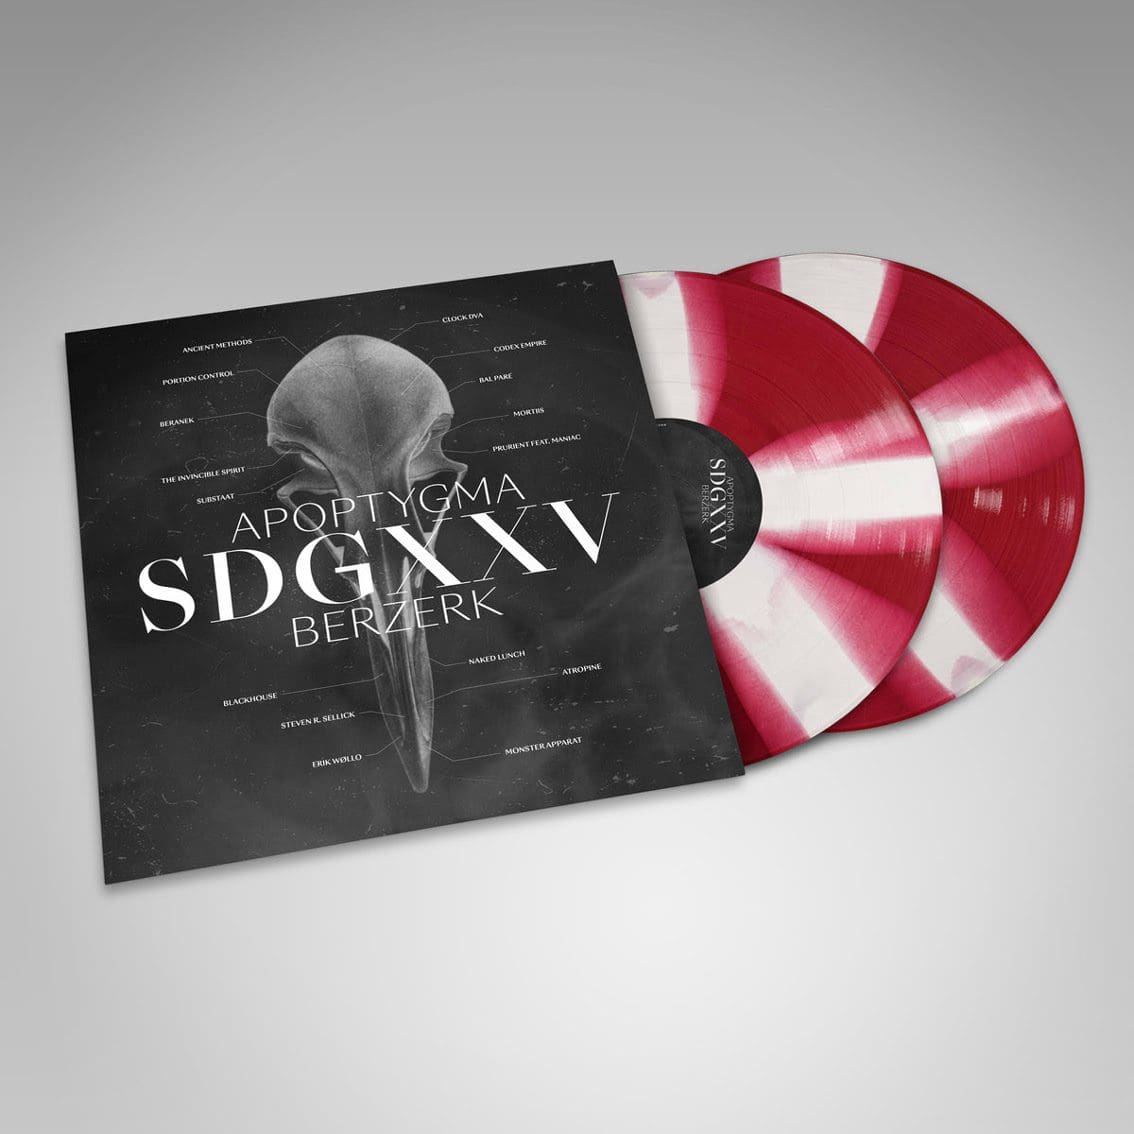 Apoptygma Berzerk re-imagine debut'Soli Deo Gloria' on'SDGXXV' - pre-orders available now